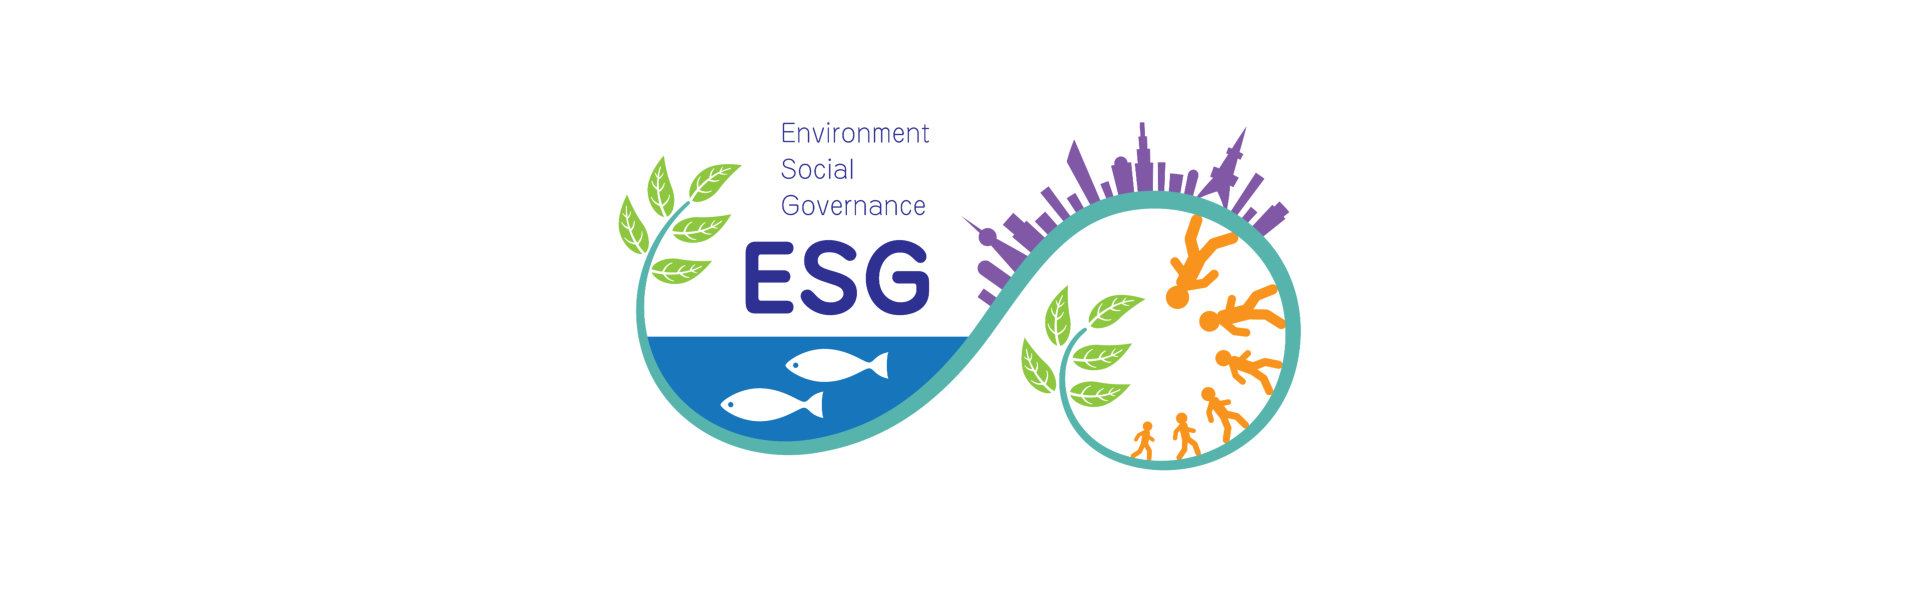 A logo of the environment social governance esg.